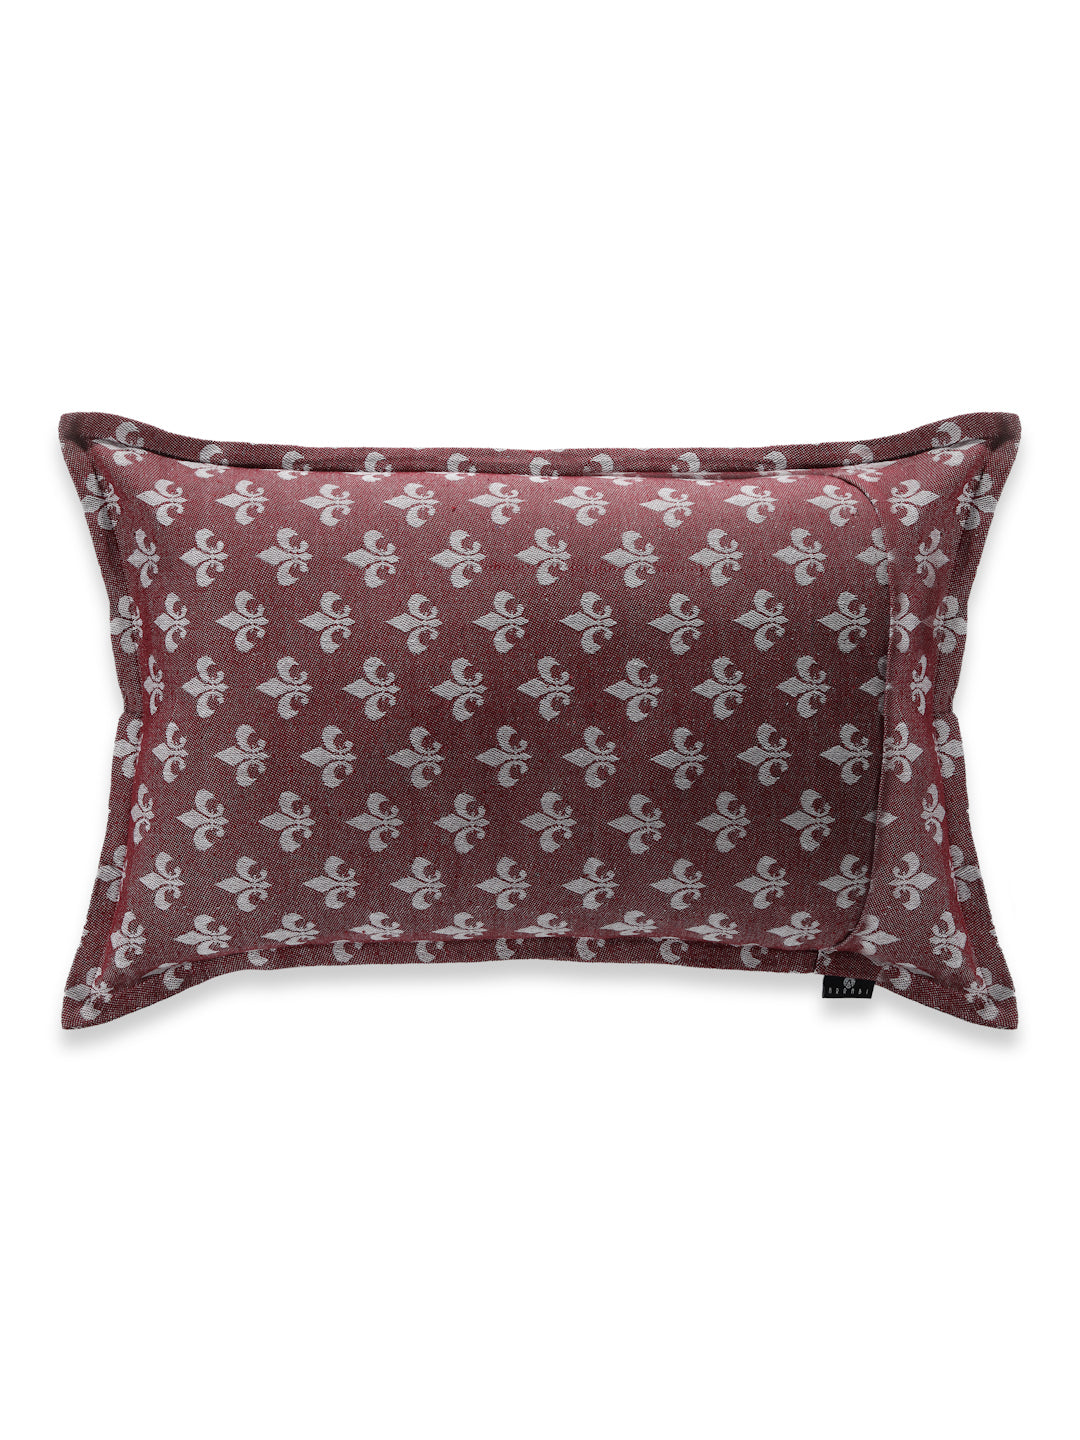 Arrabi Red Floral Handwoven Cotton Set of 2 Pillow Covers (70 x 45 cm)